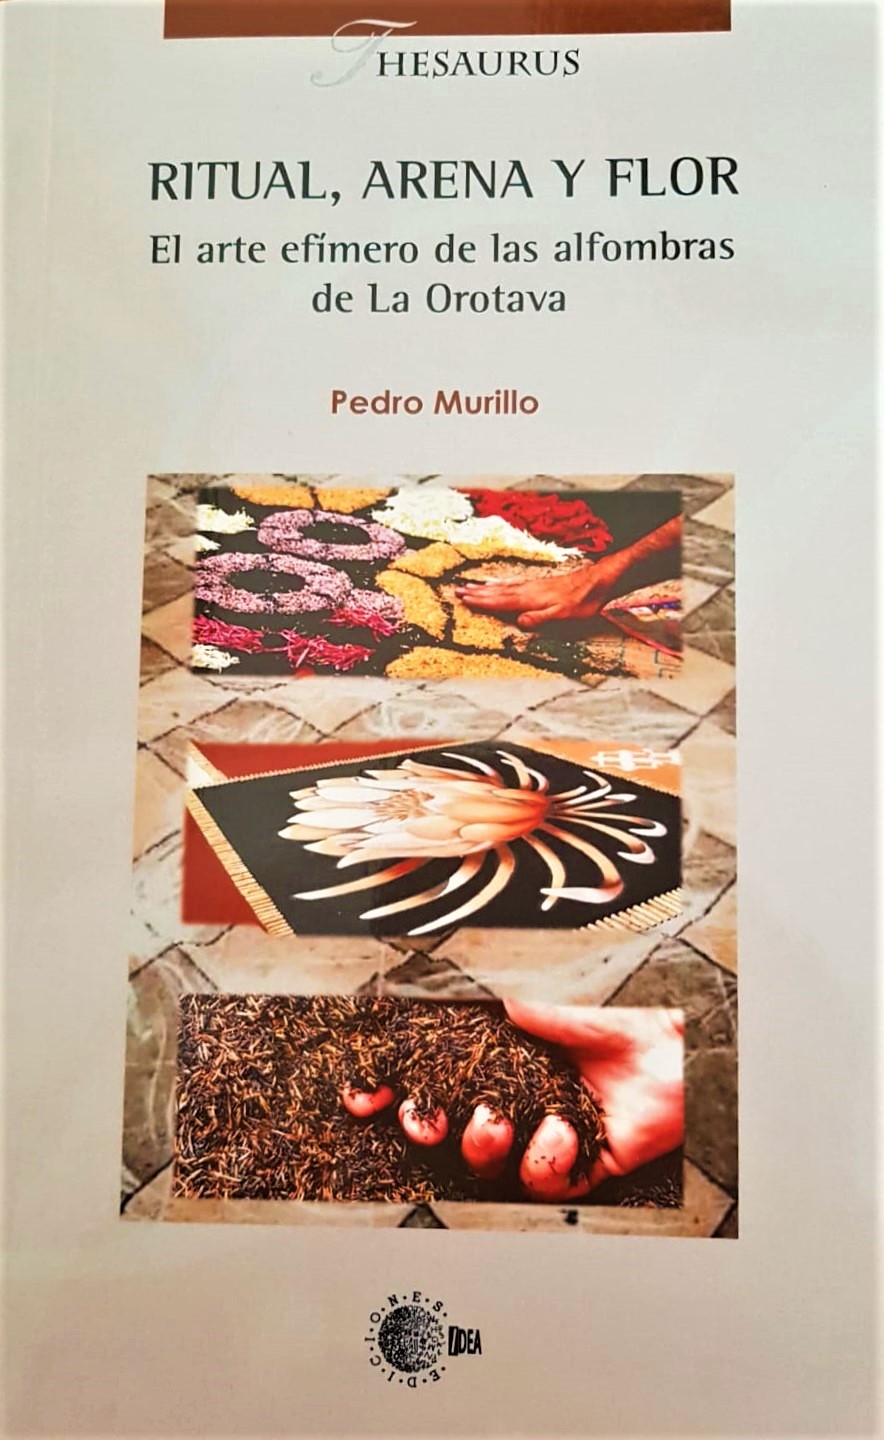 Pedro Murillo presenta "Ritual, Arena y Flor"